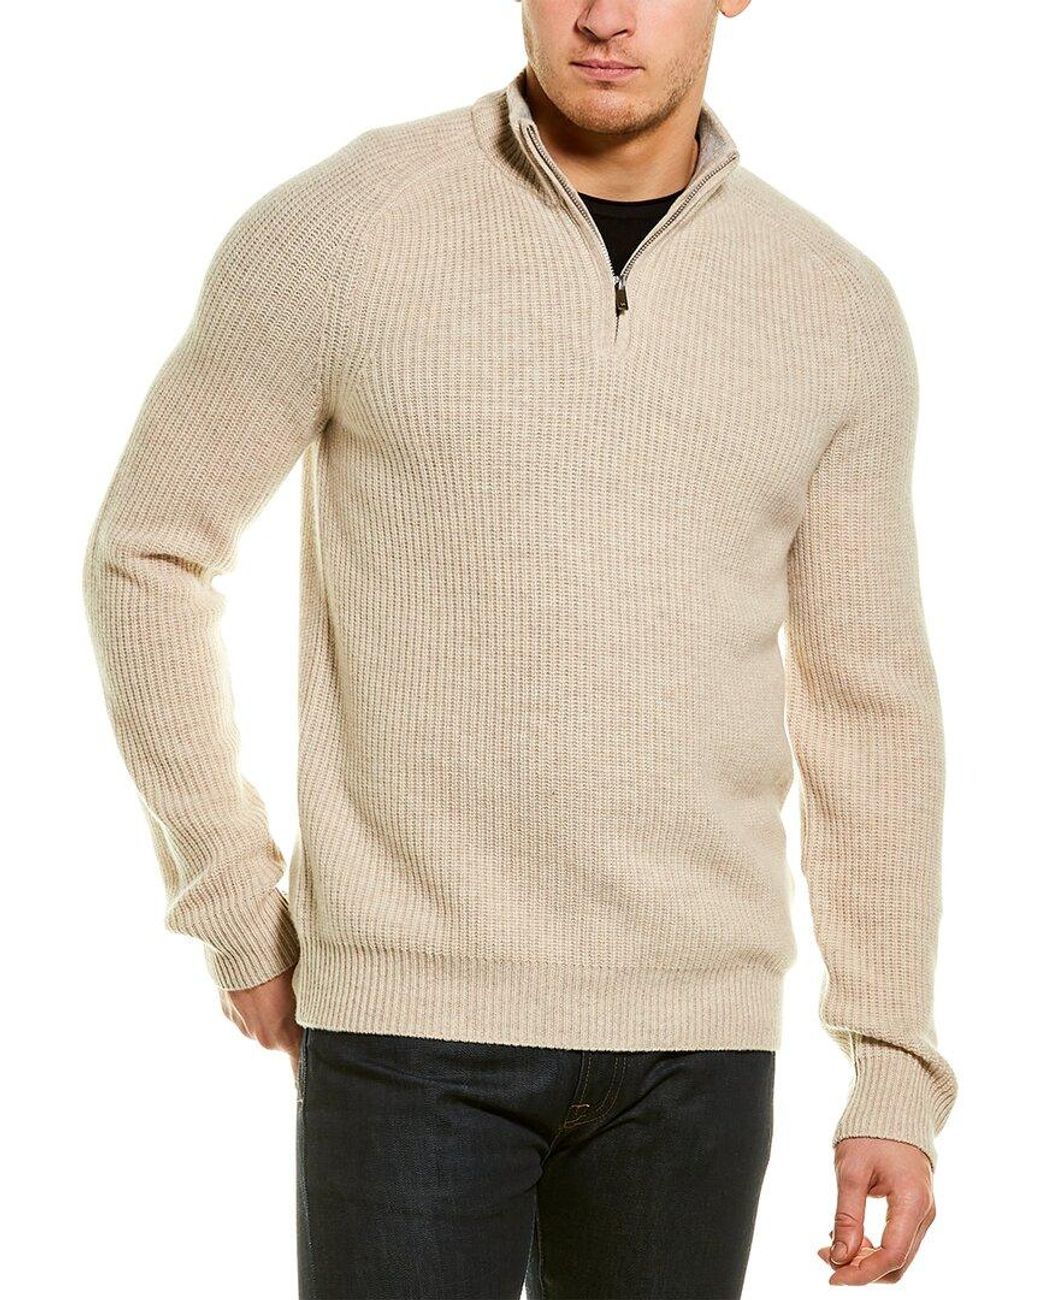 NAADAM Cashmere Quarter-zip Pullover in Beige (Natural) for Men - Lyst